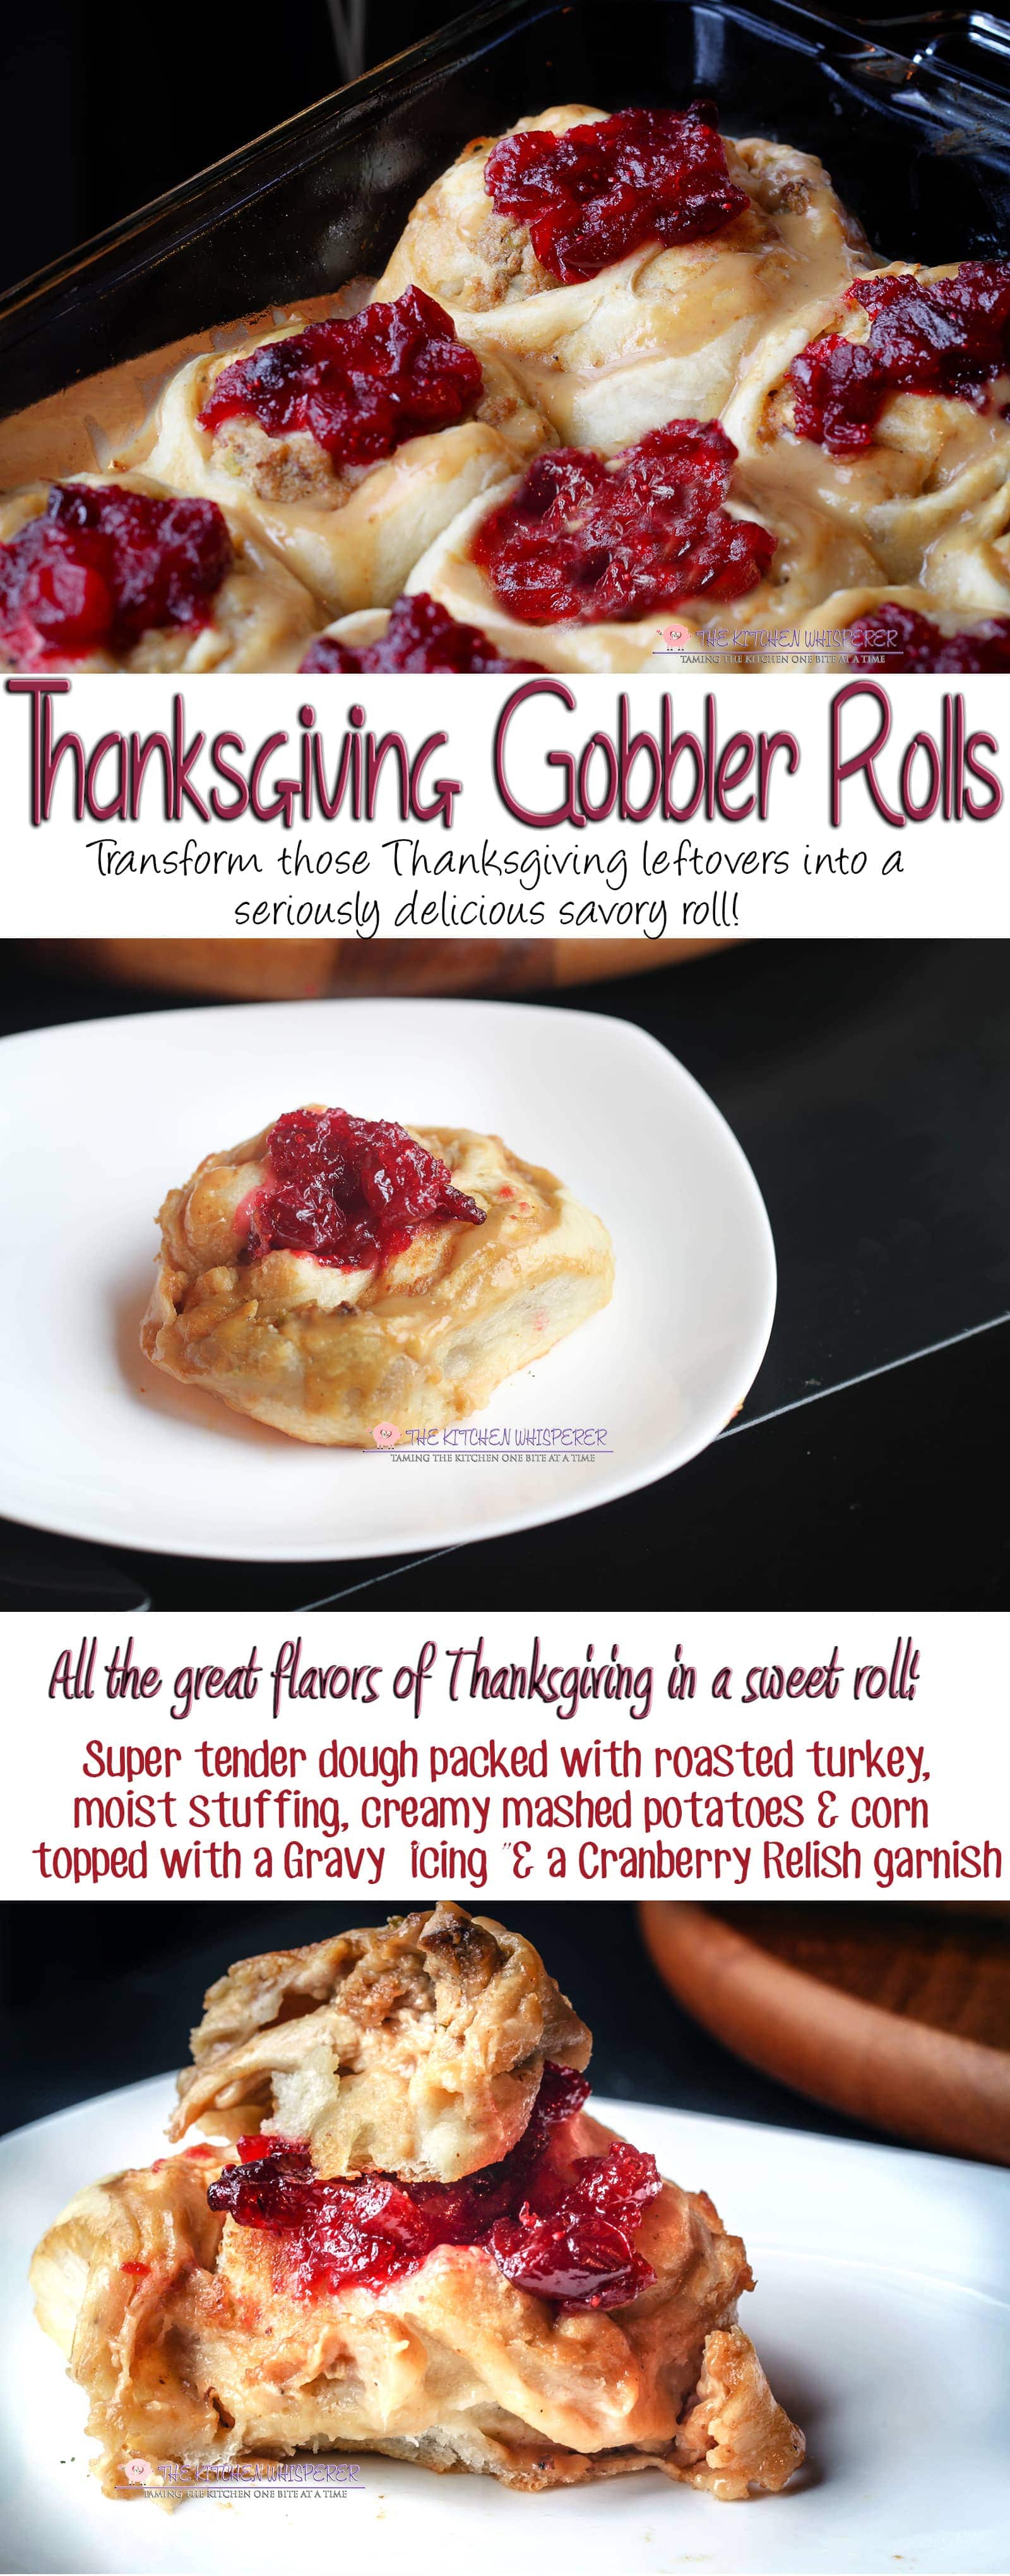 thanksgiving-gobbler-rolls-collage